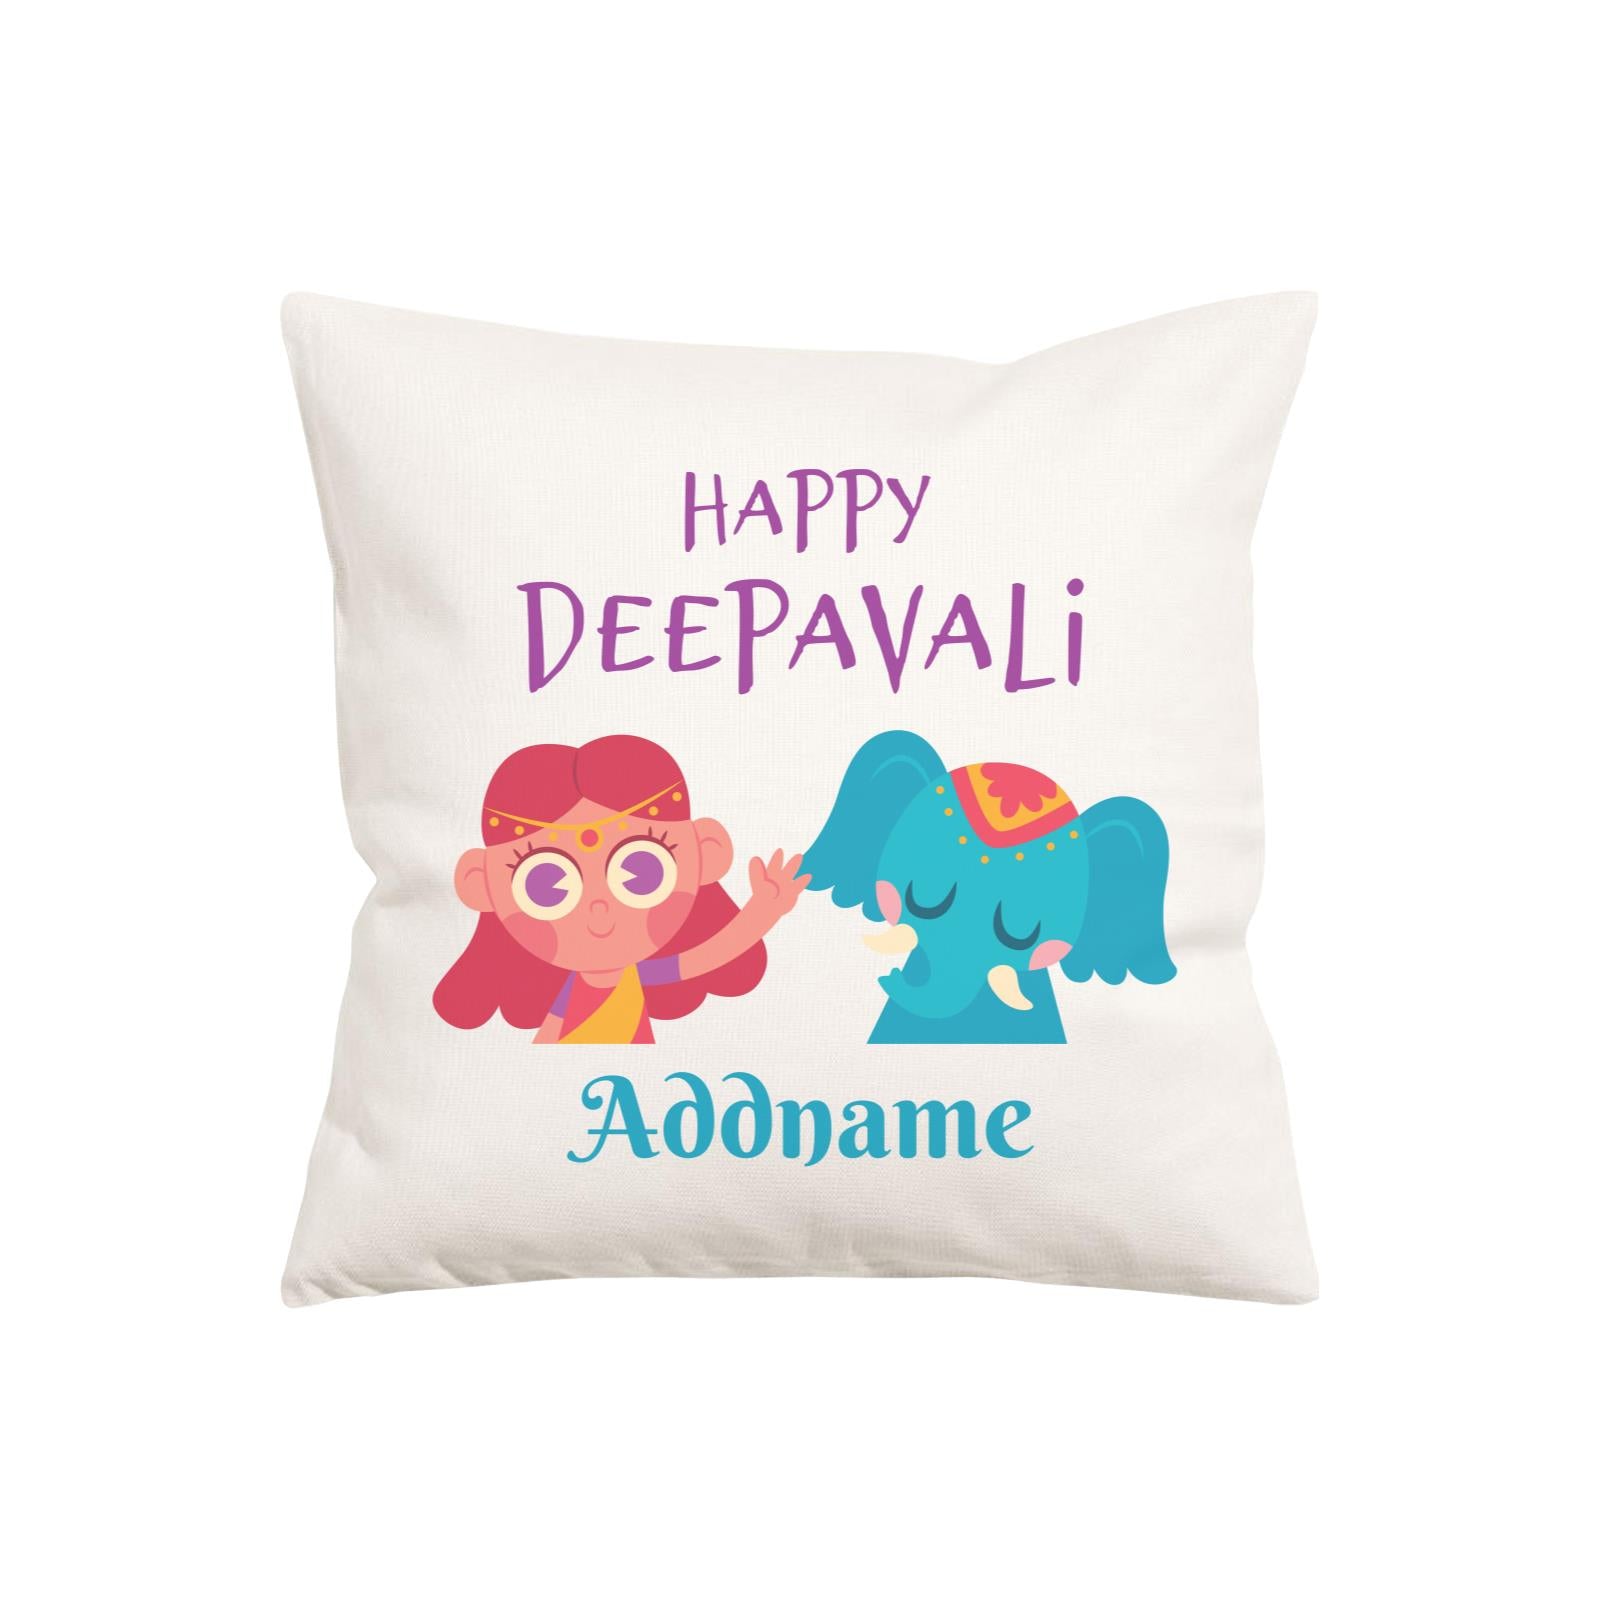 Deepavali Series Little Girl Wishes You Happy Deepavali PW Cushion